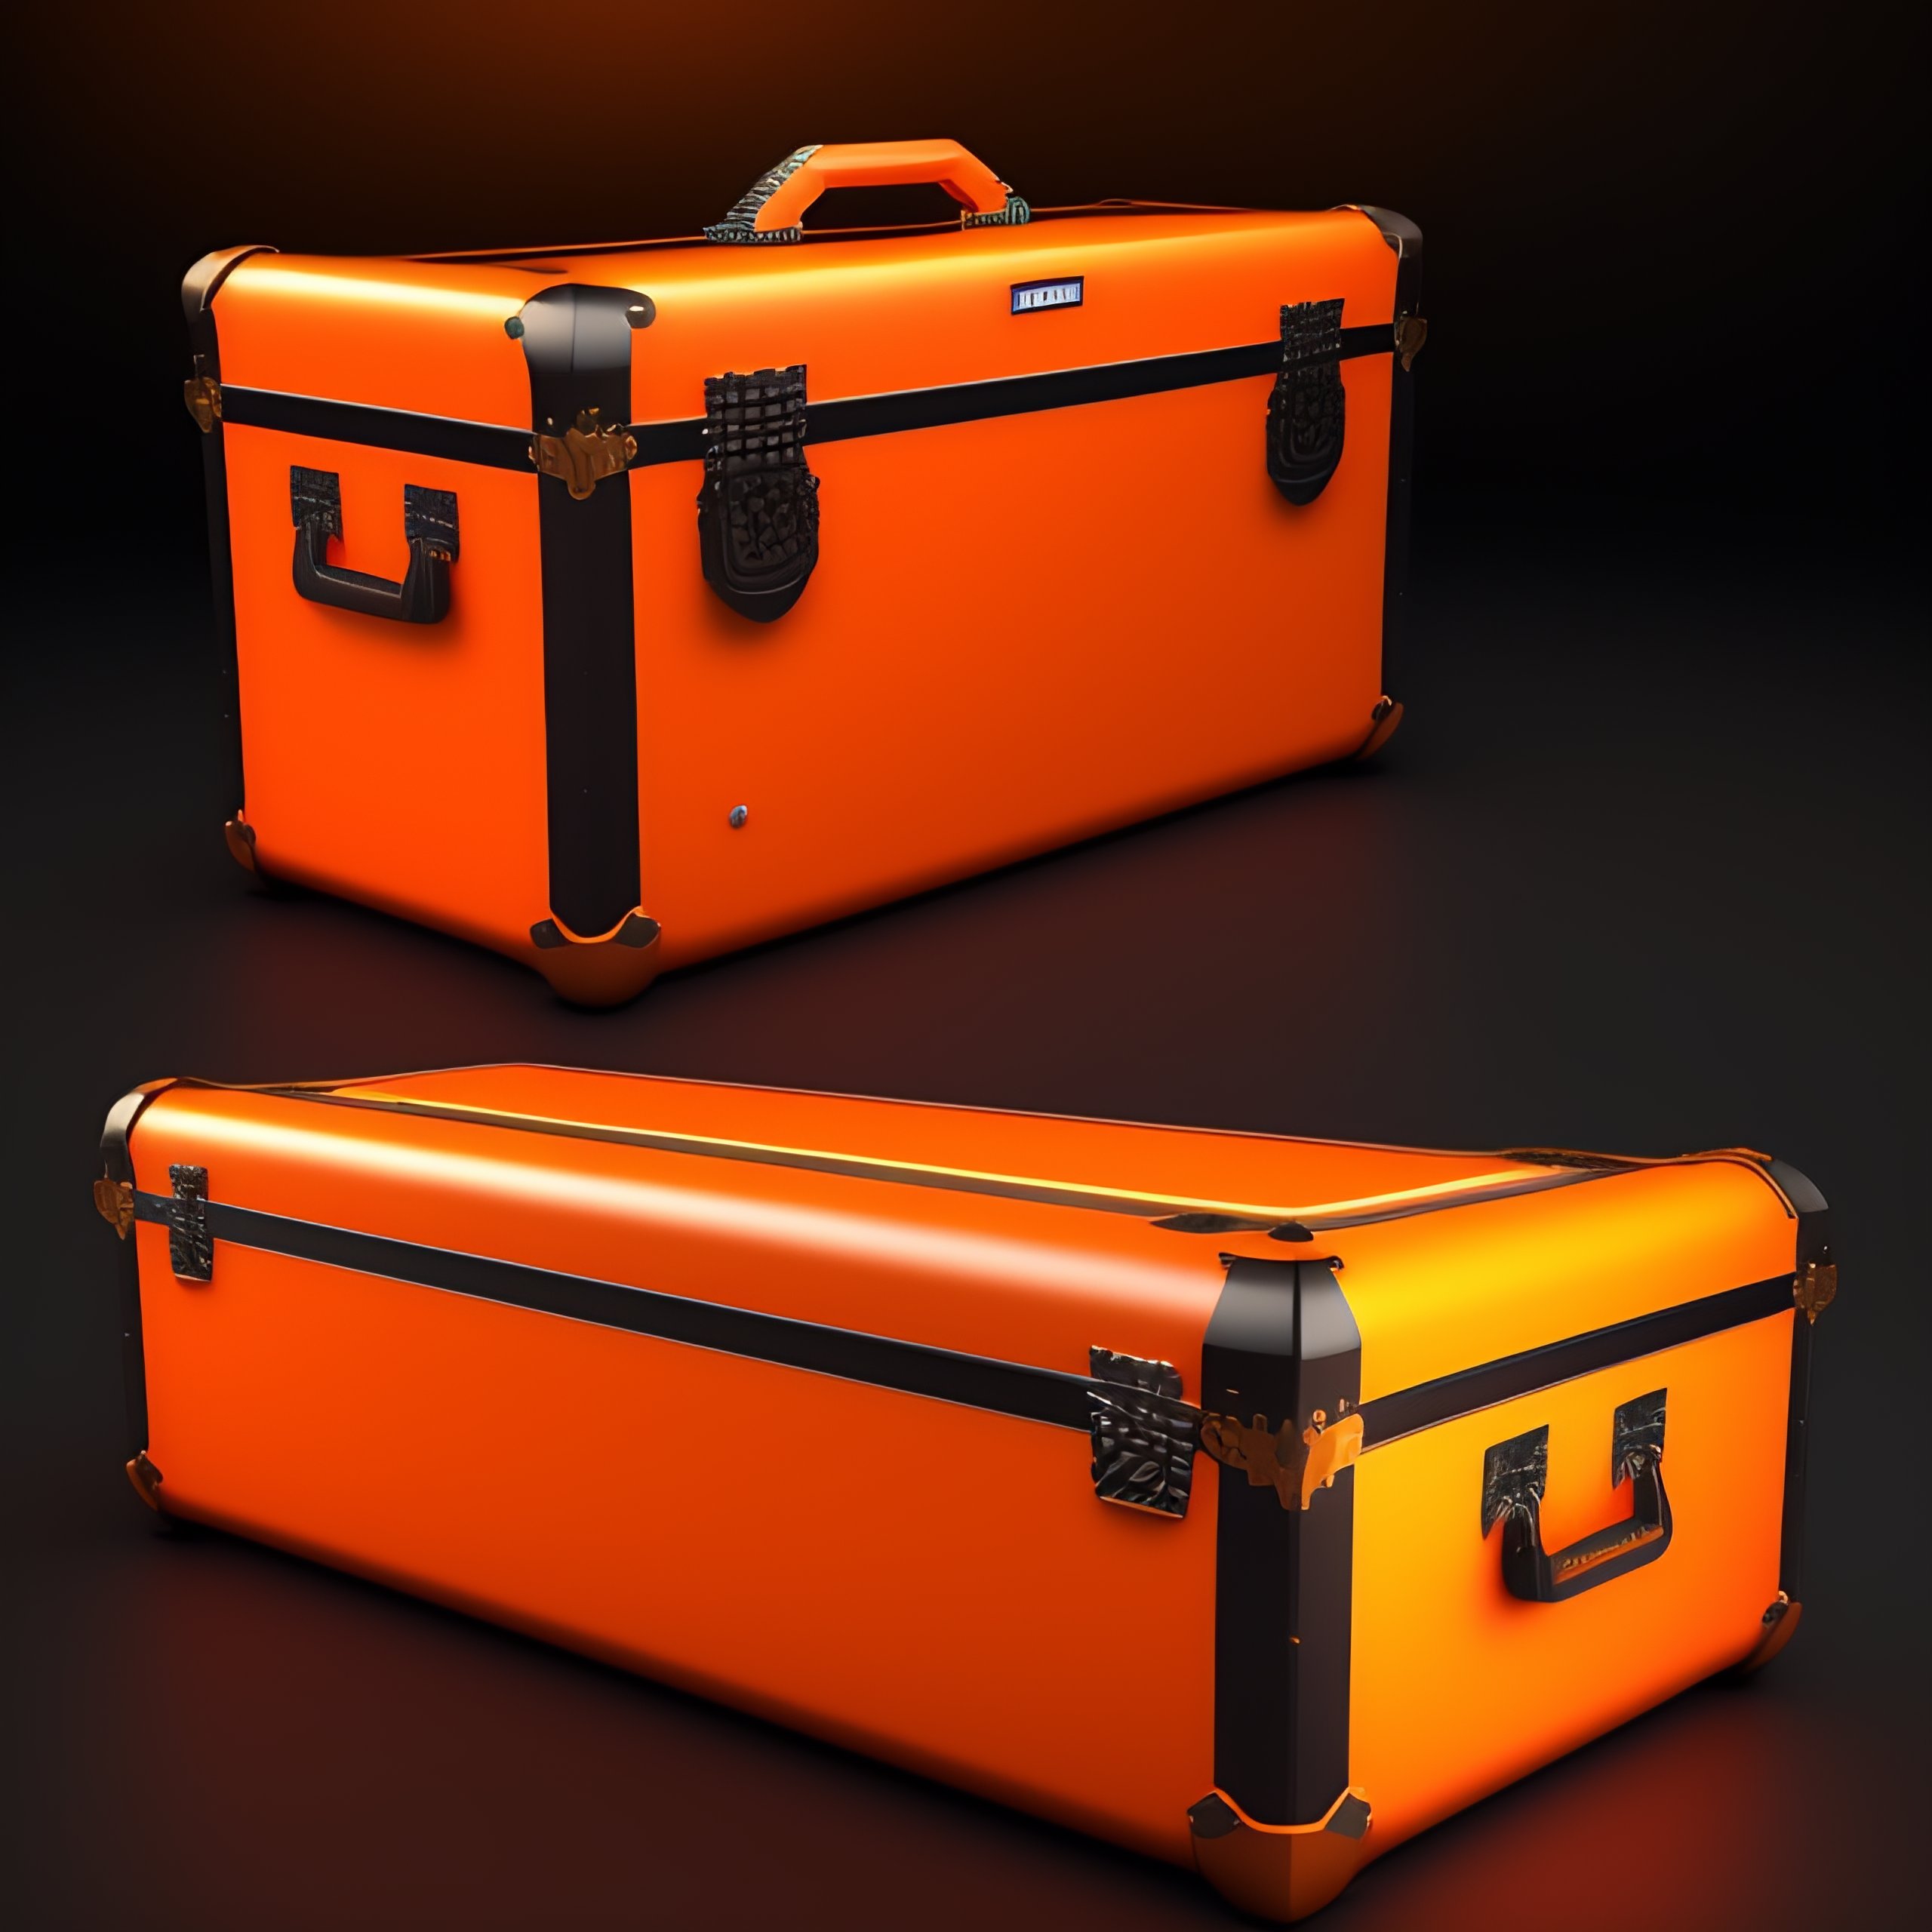 Lexica - CS-GO deluxe big gun box case, skin collection, orange color,  militar pattern details, Knolling layout, Highly detailed, Depth, Lumen  render